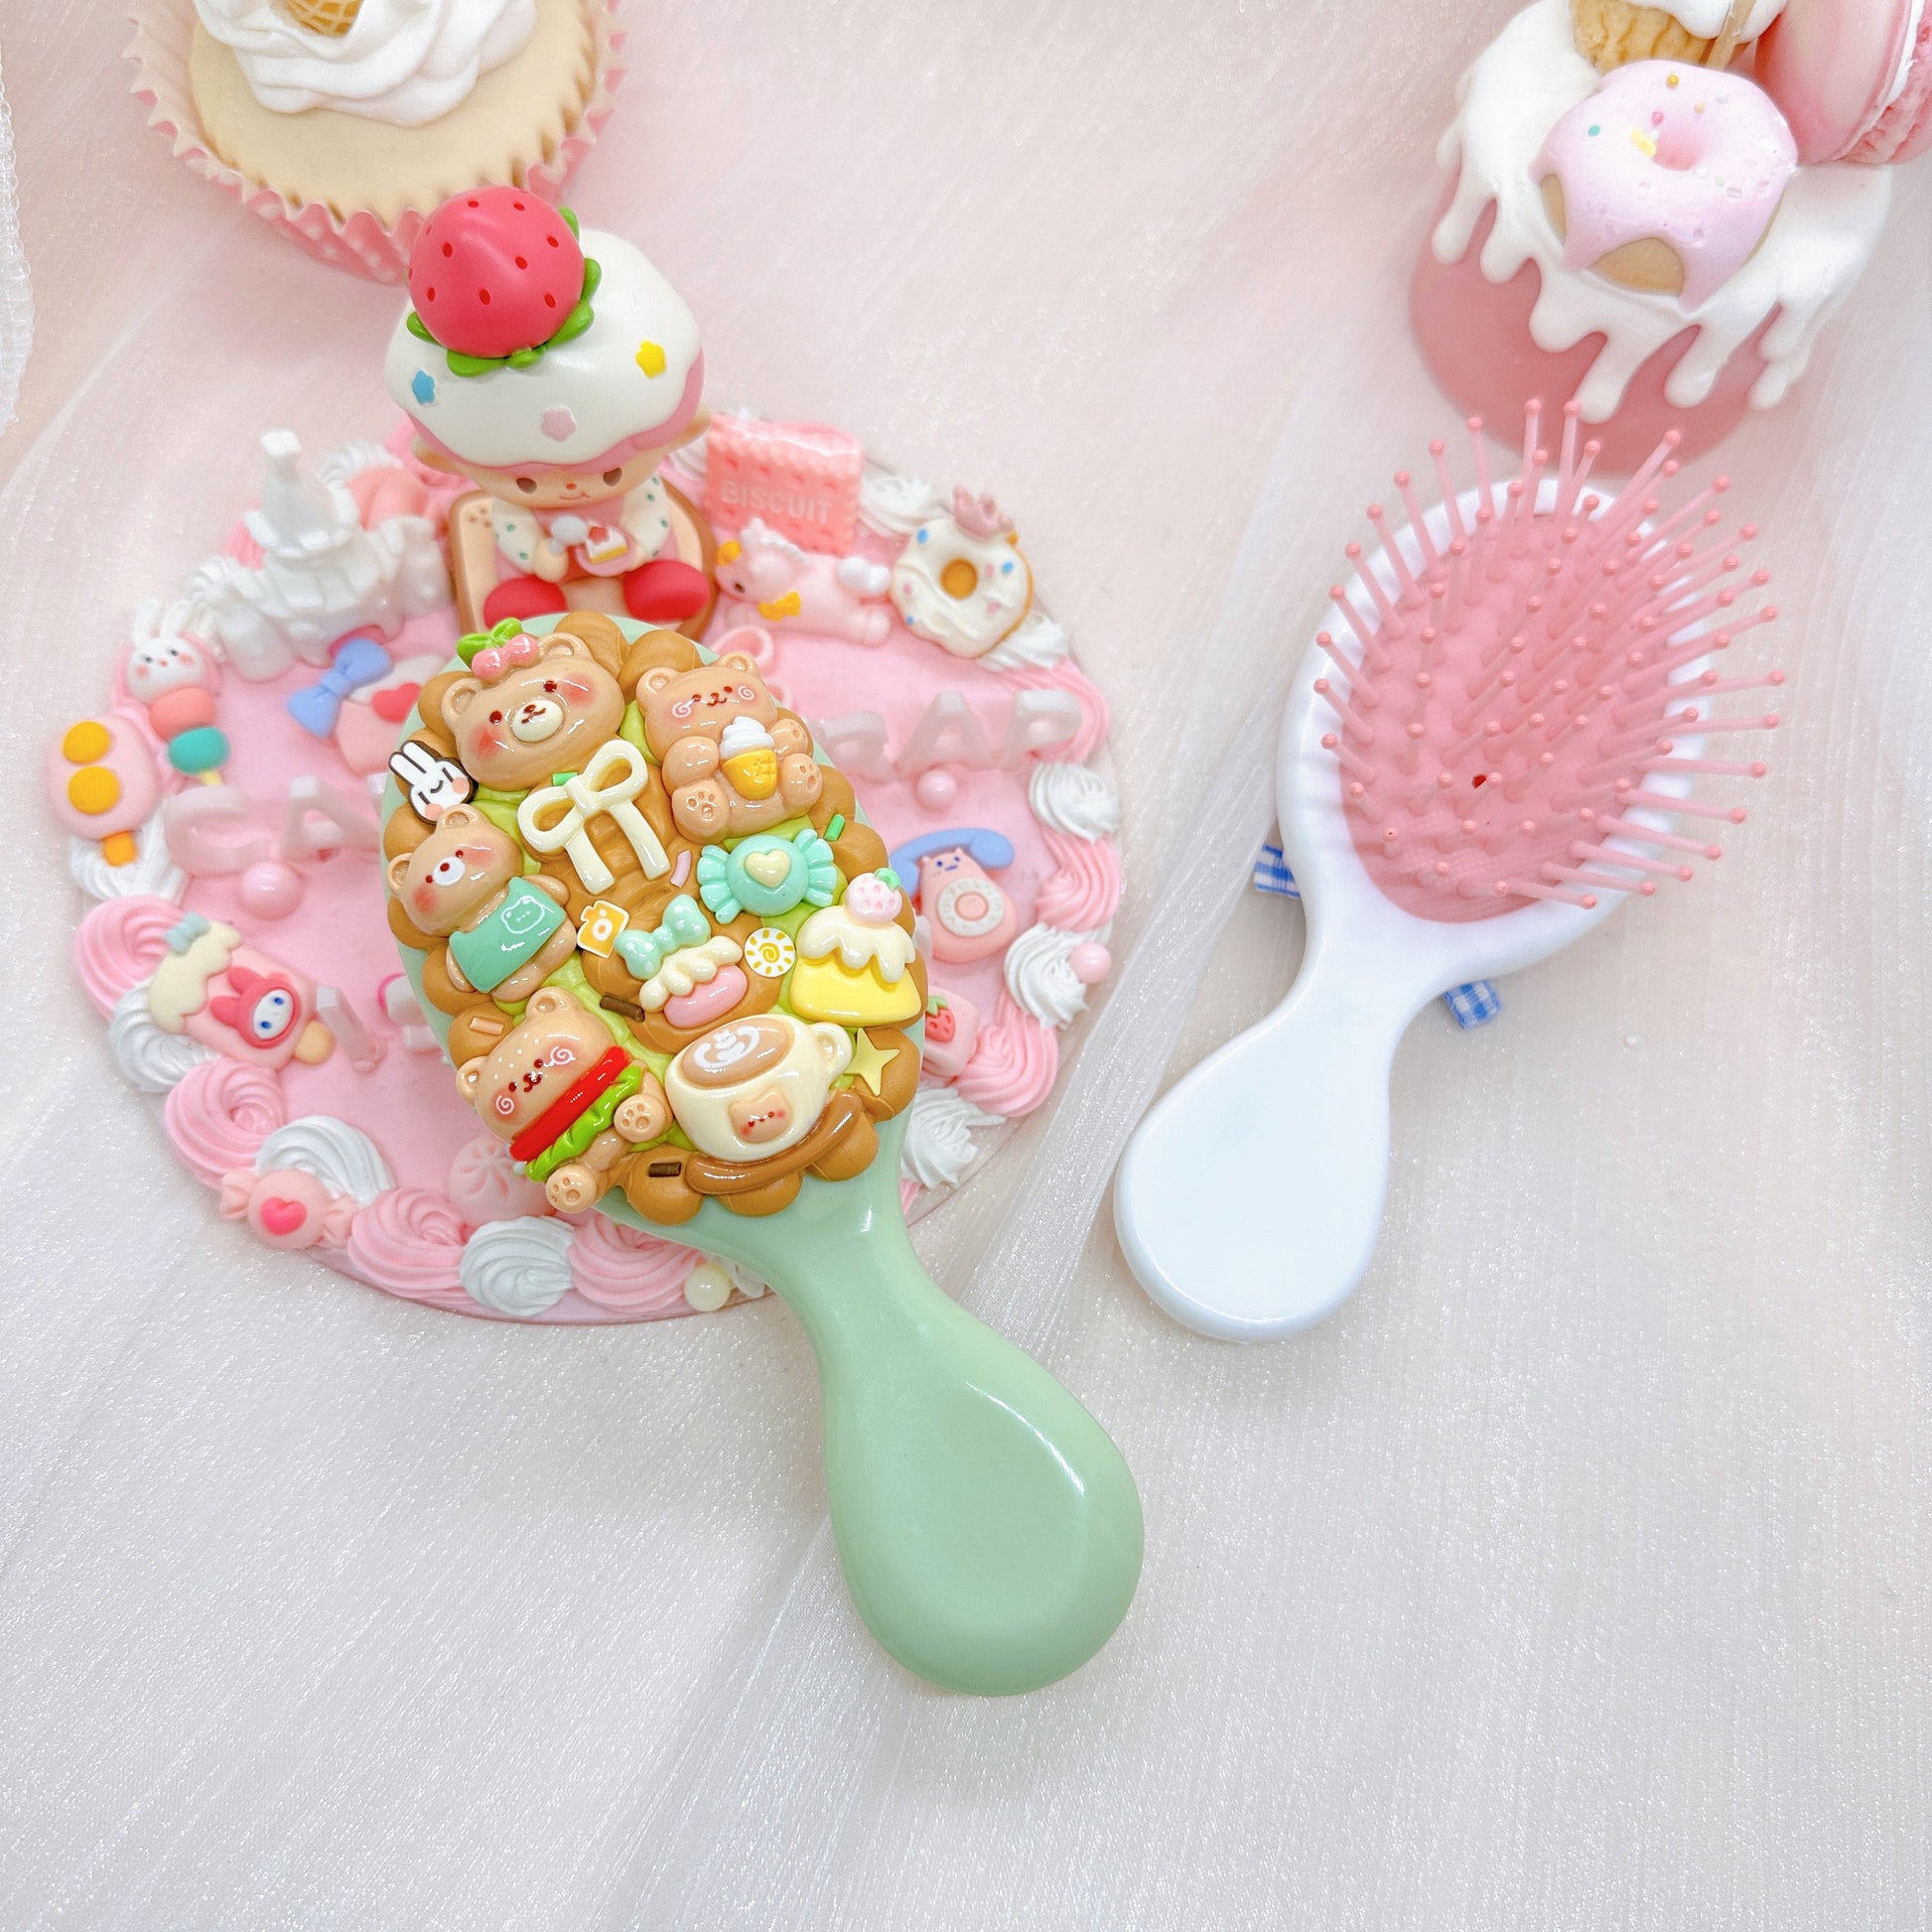 Handmade hairbrush, Kawaii Decoden Hairbrush, Cute Cartoon Hairbrush